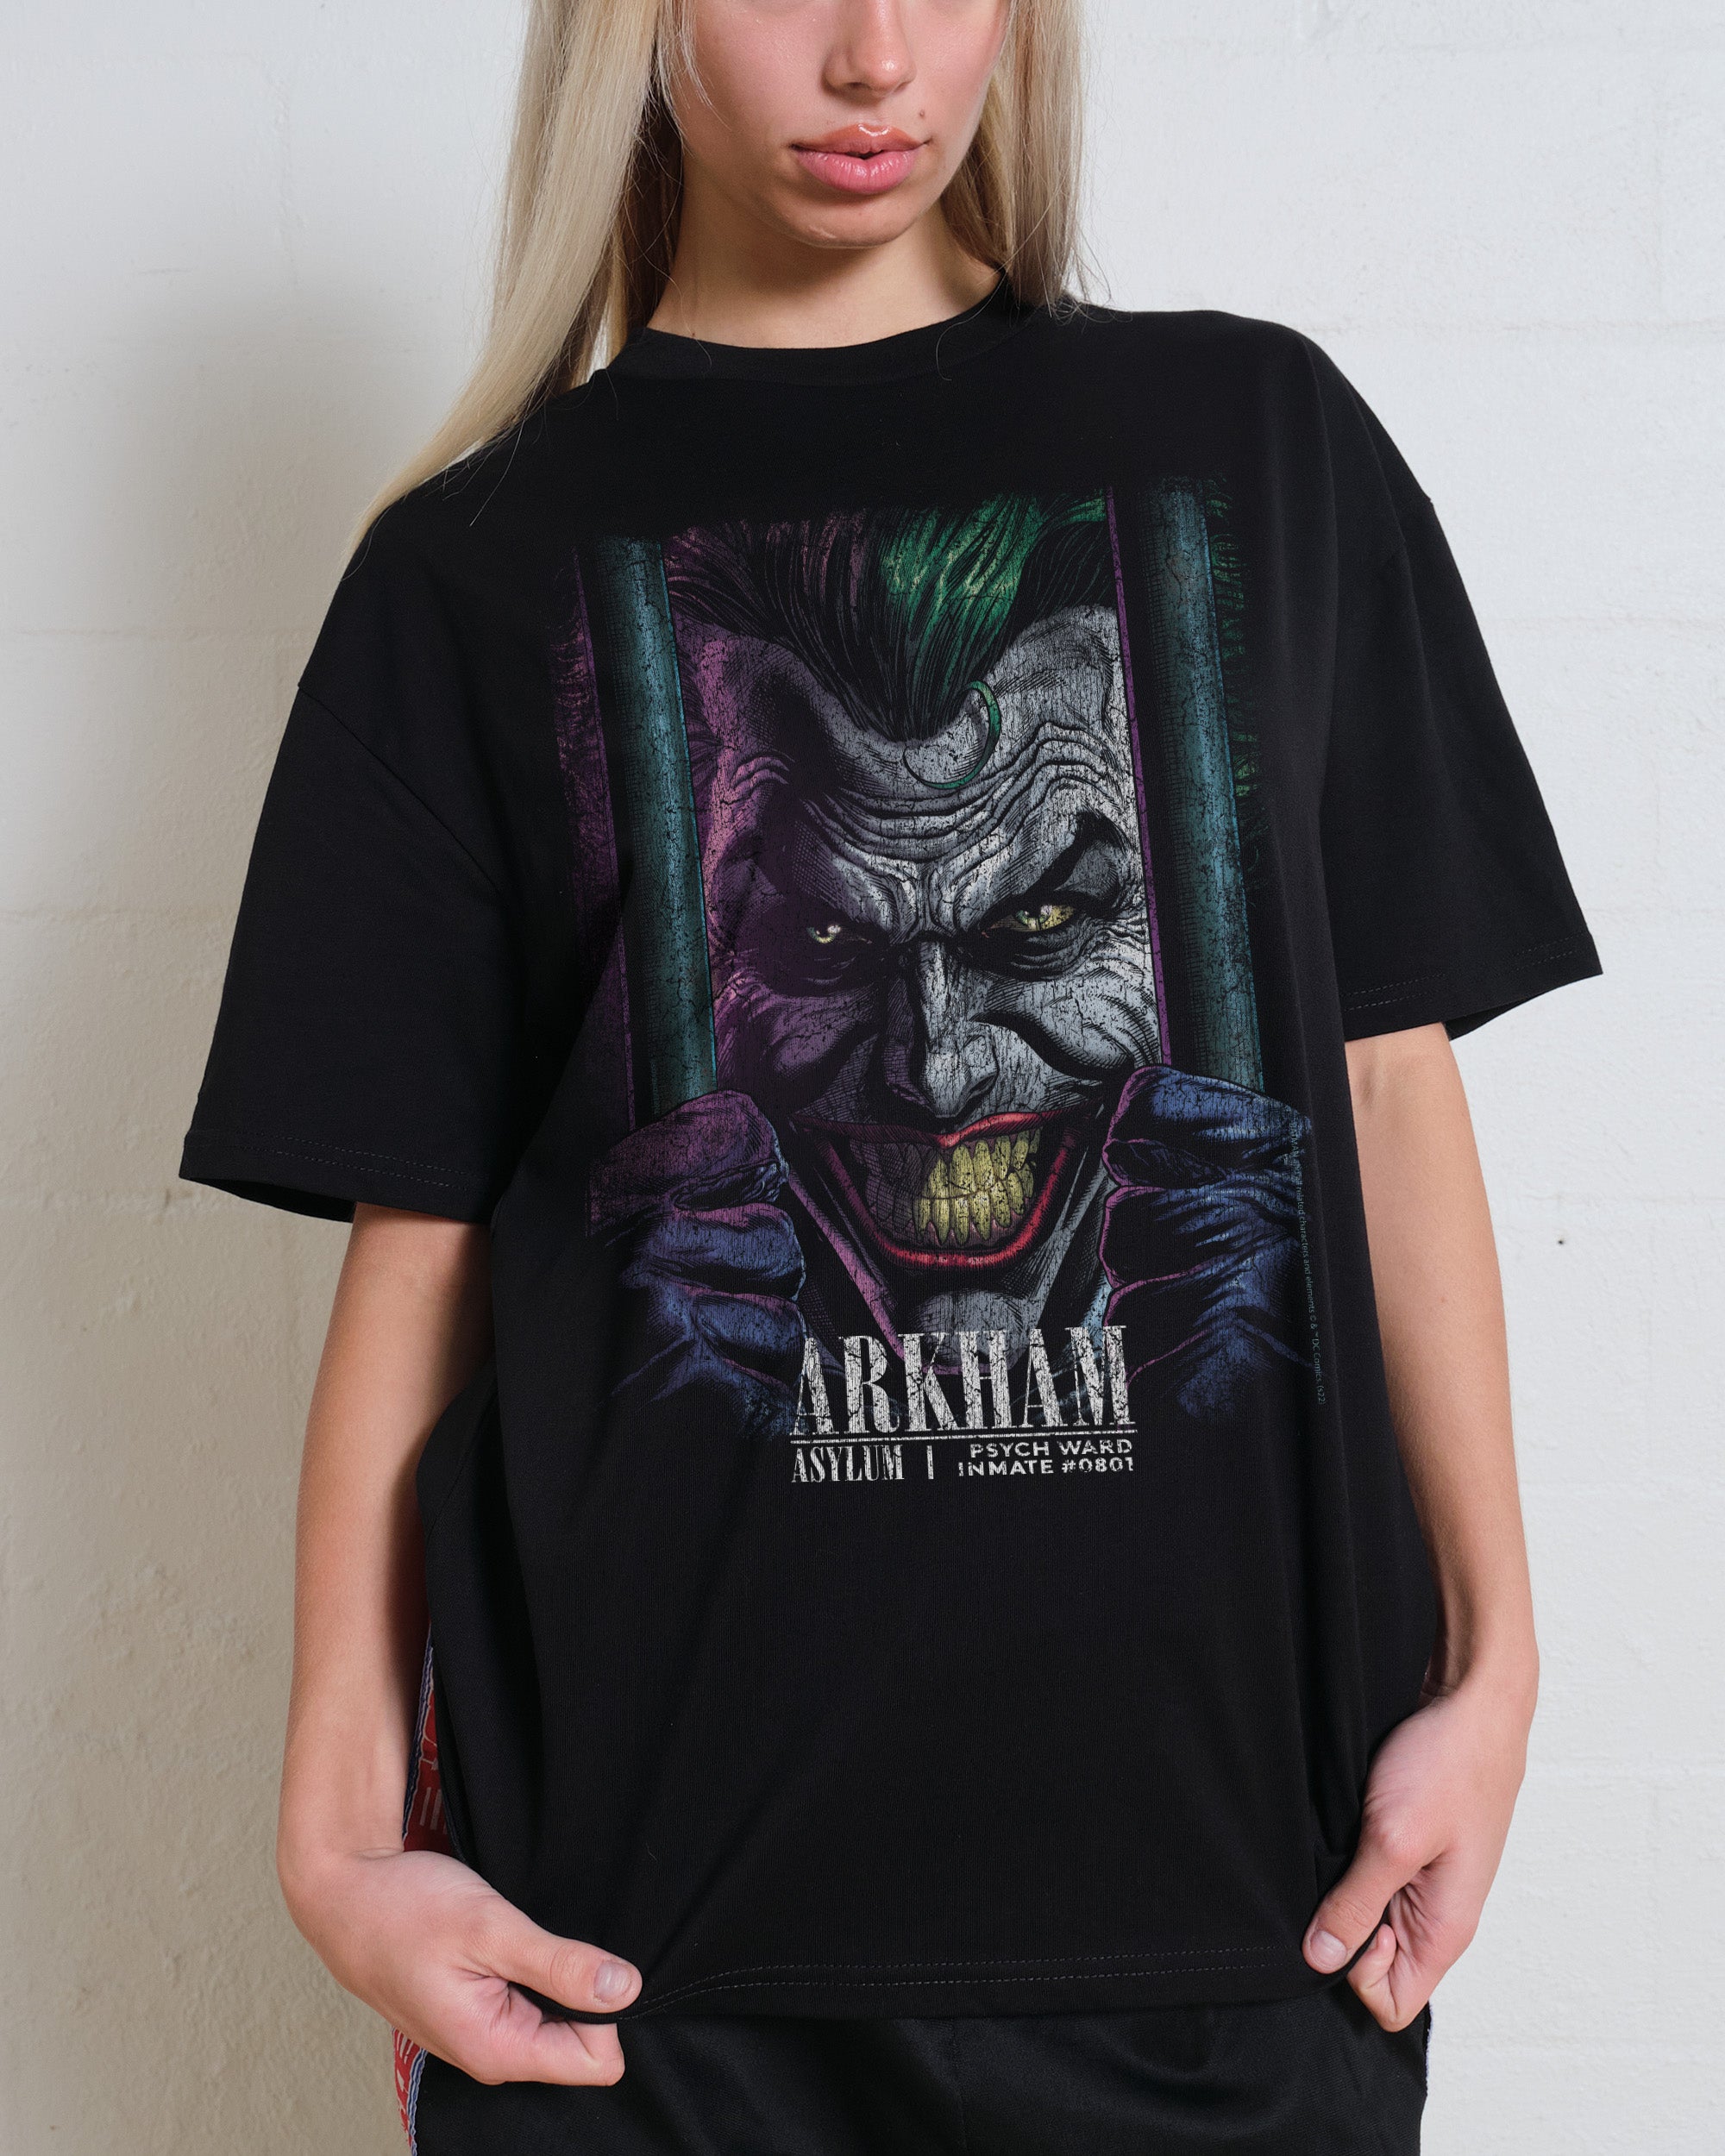 The Joker Arkham T-Shirt